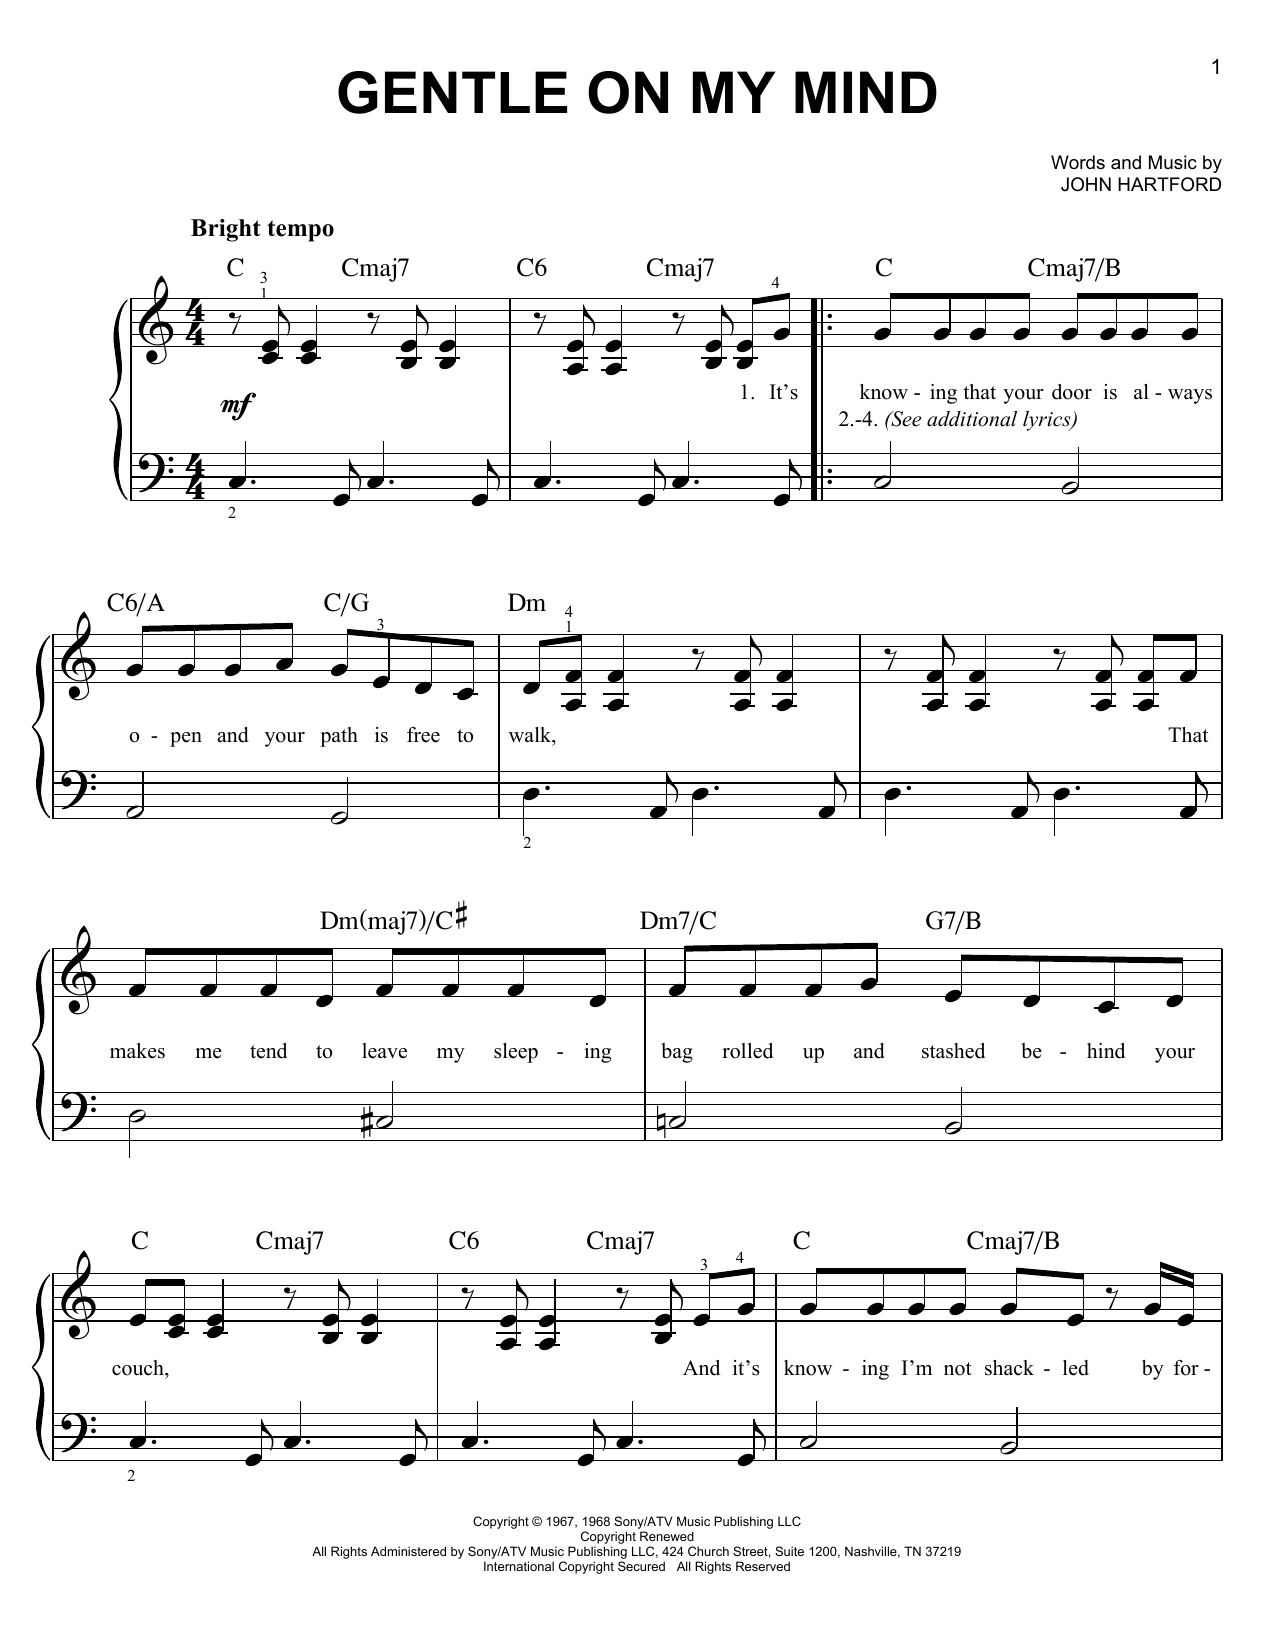 Glen Campbell Gentle On My Mind Sheet Music Notes & Chords for Lyrics & Chords - Download or Print PDF